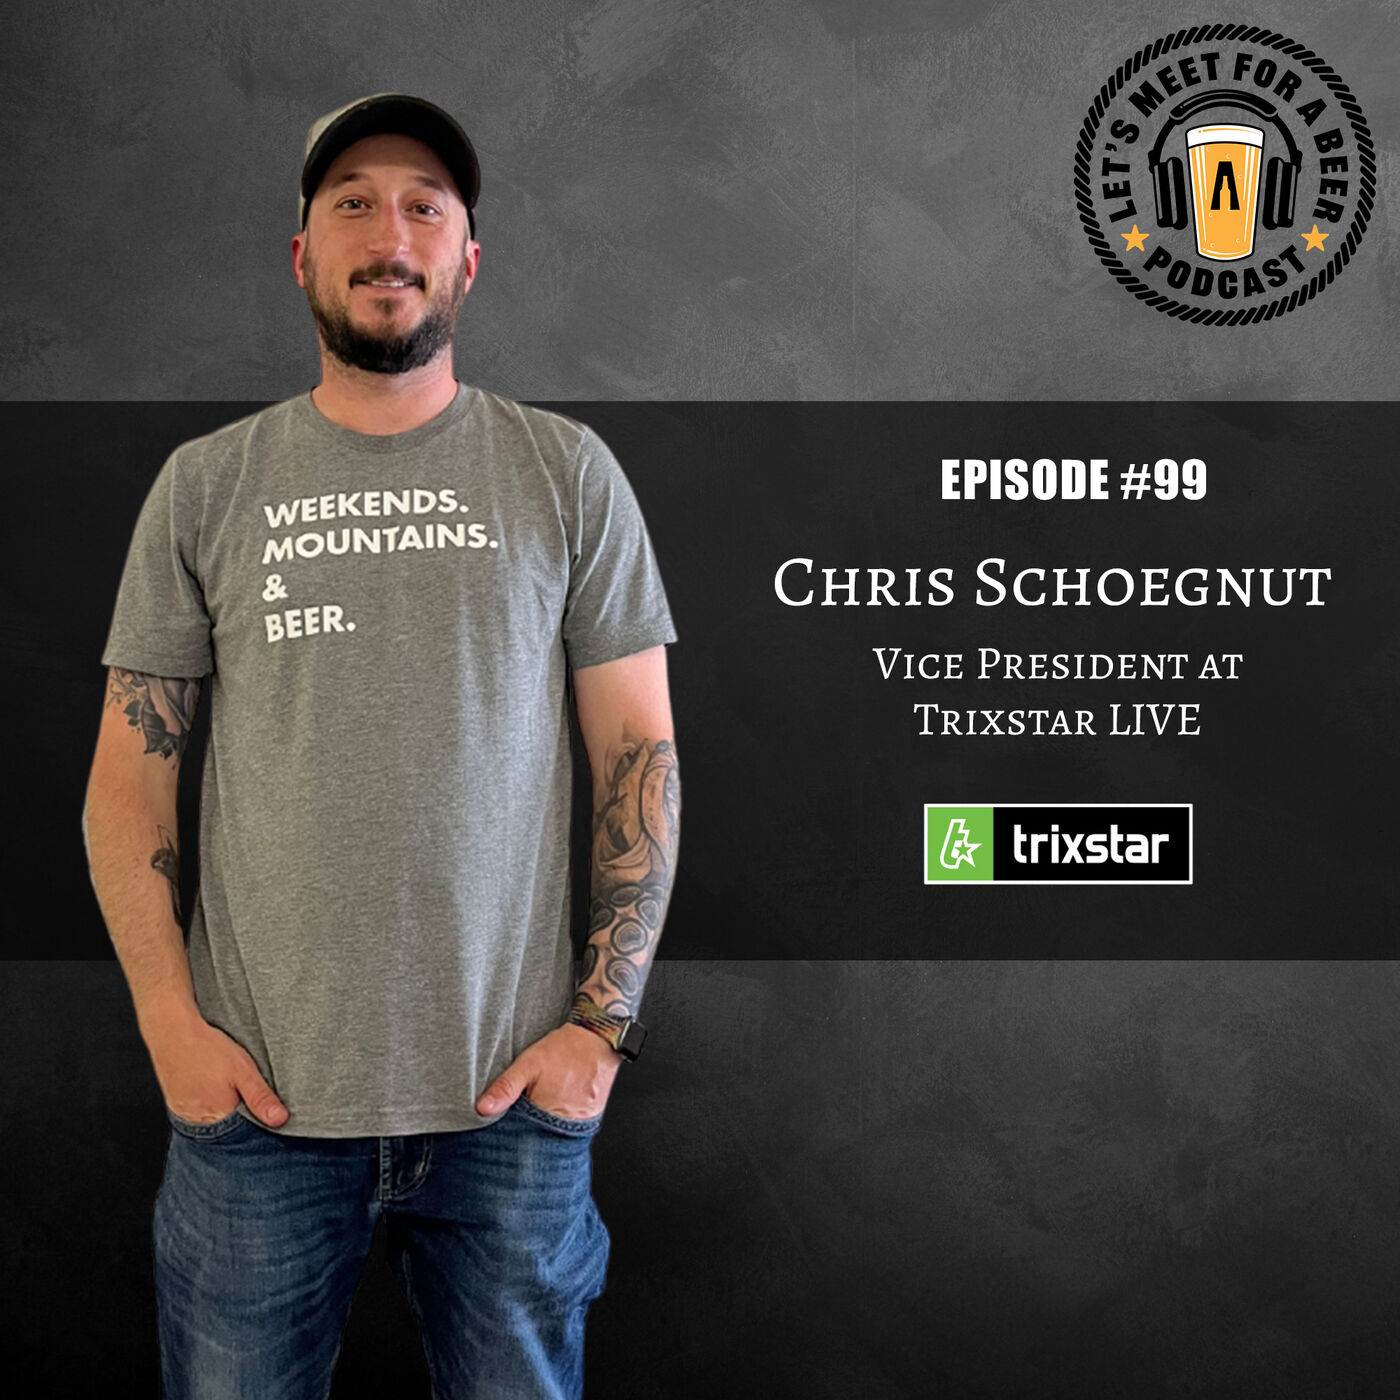 Episode #99 – Chris Schoegnut, Vice President at Trixstar LIVE